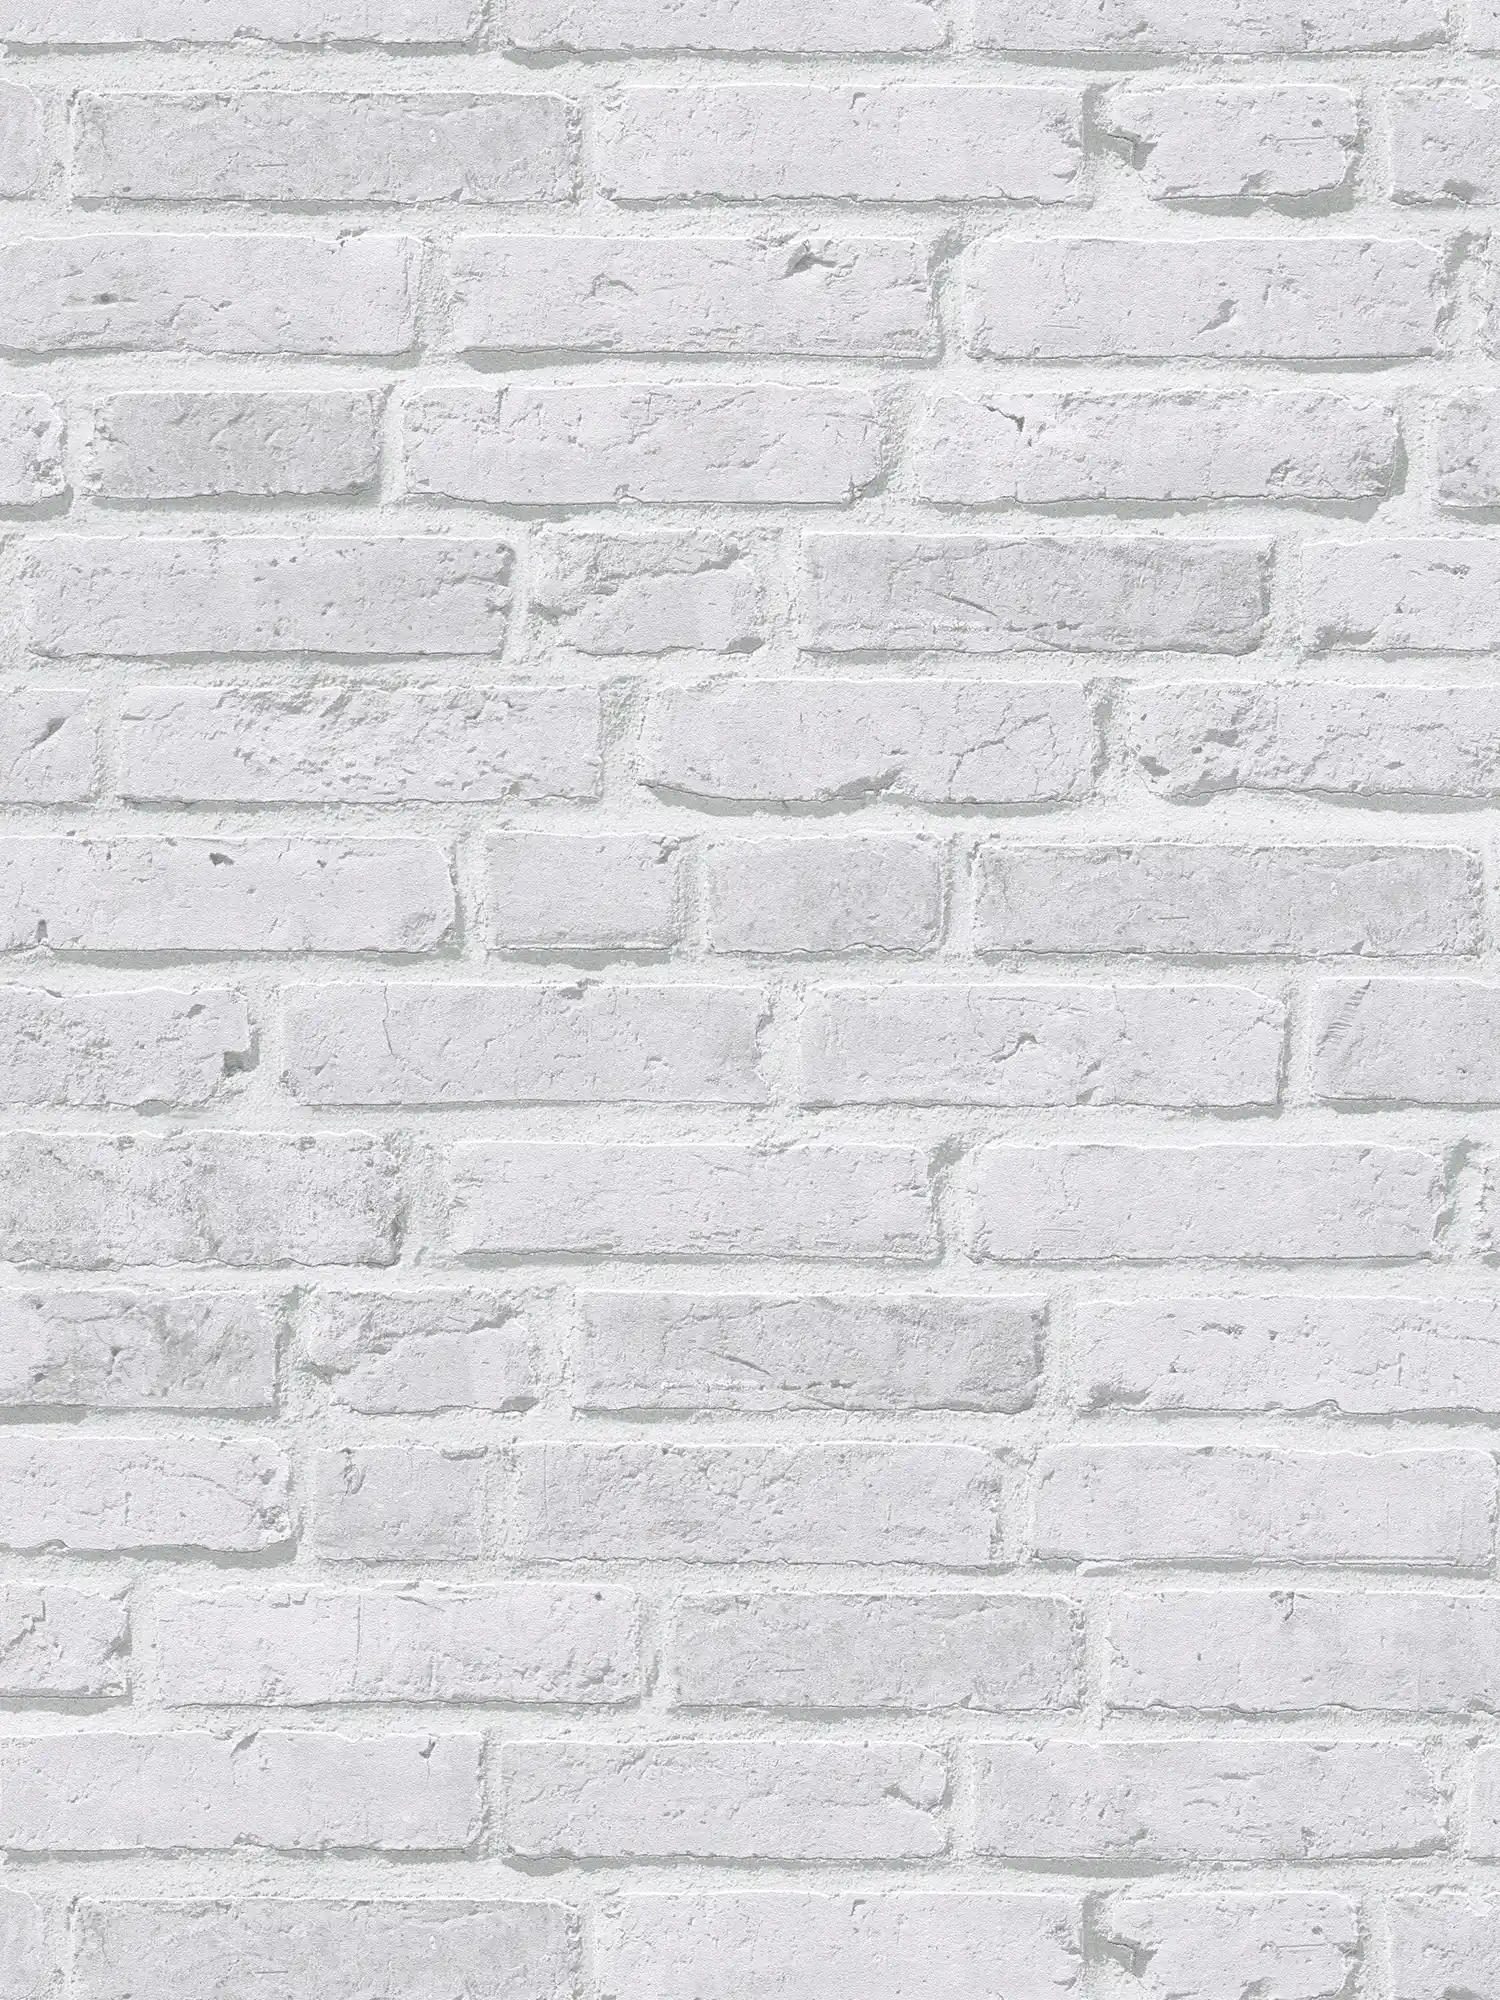         Bright brick wallpaper with 3D look - grey
    